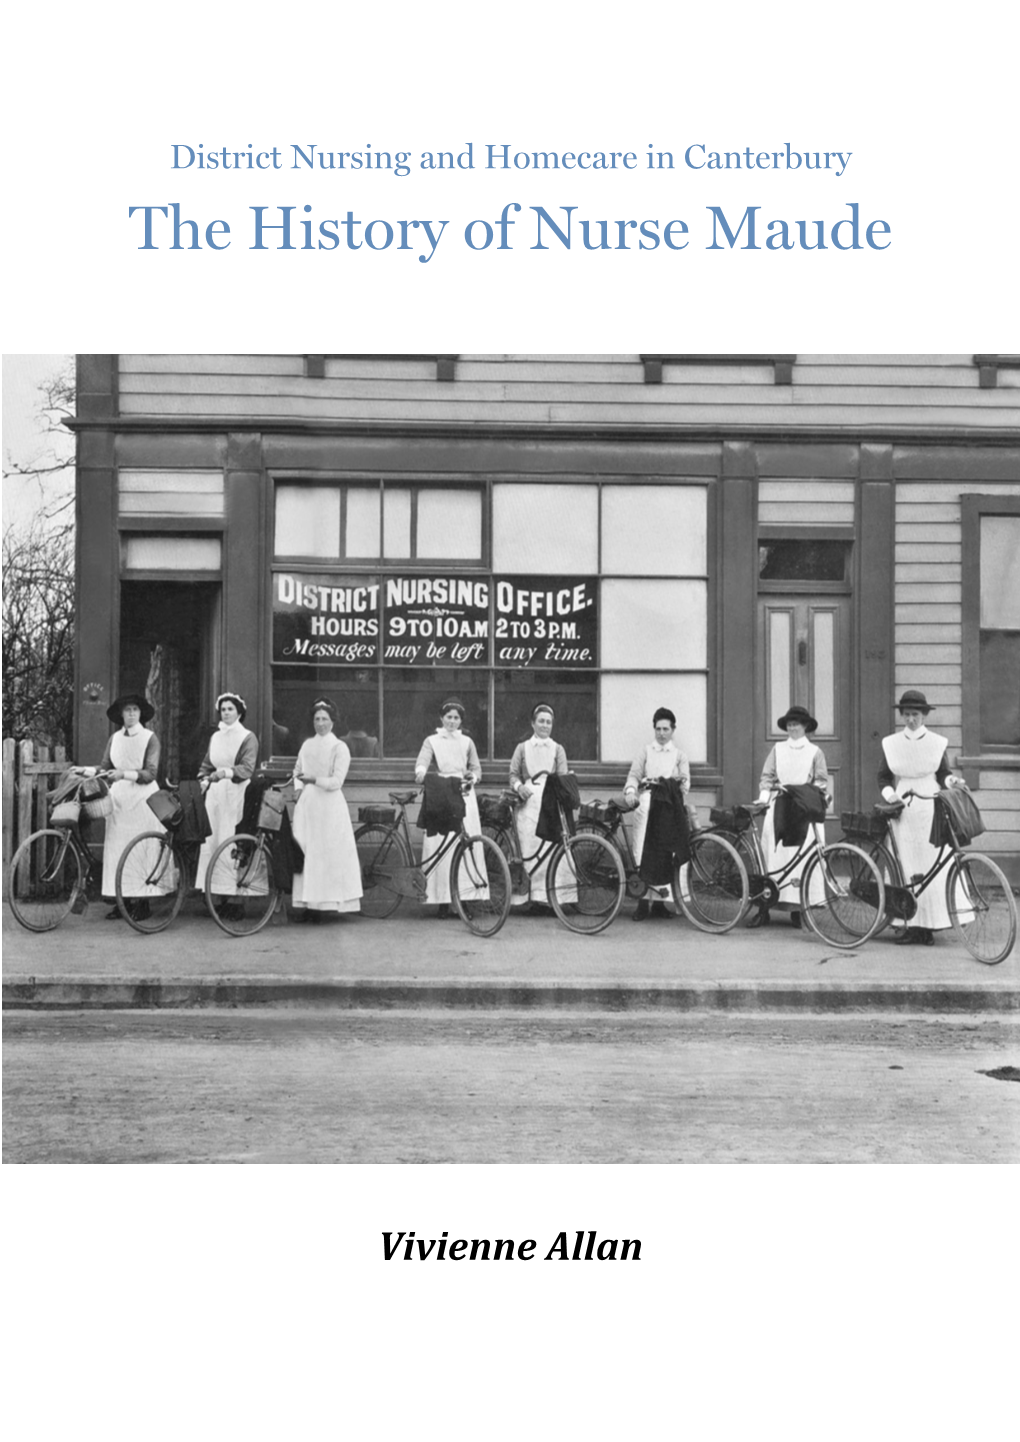 The History of Nurse Maude